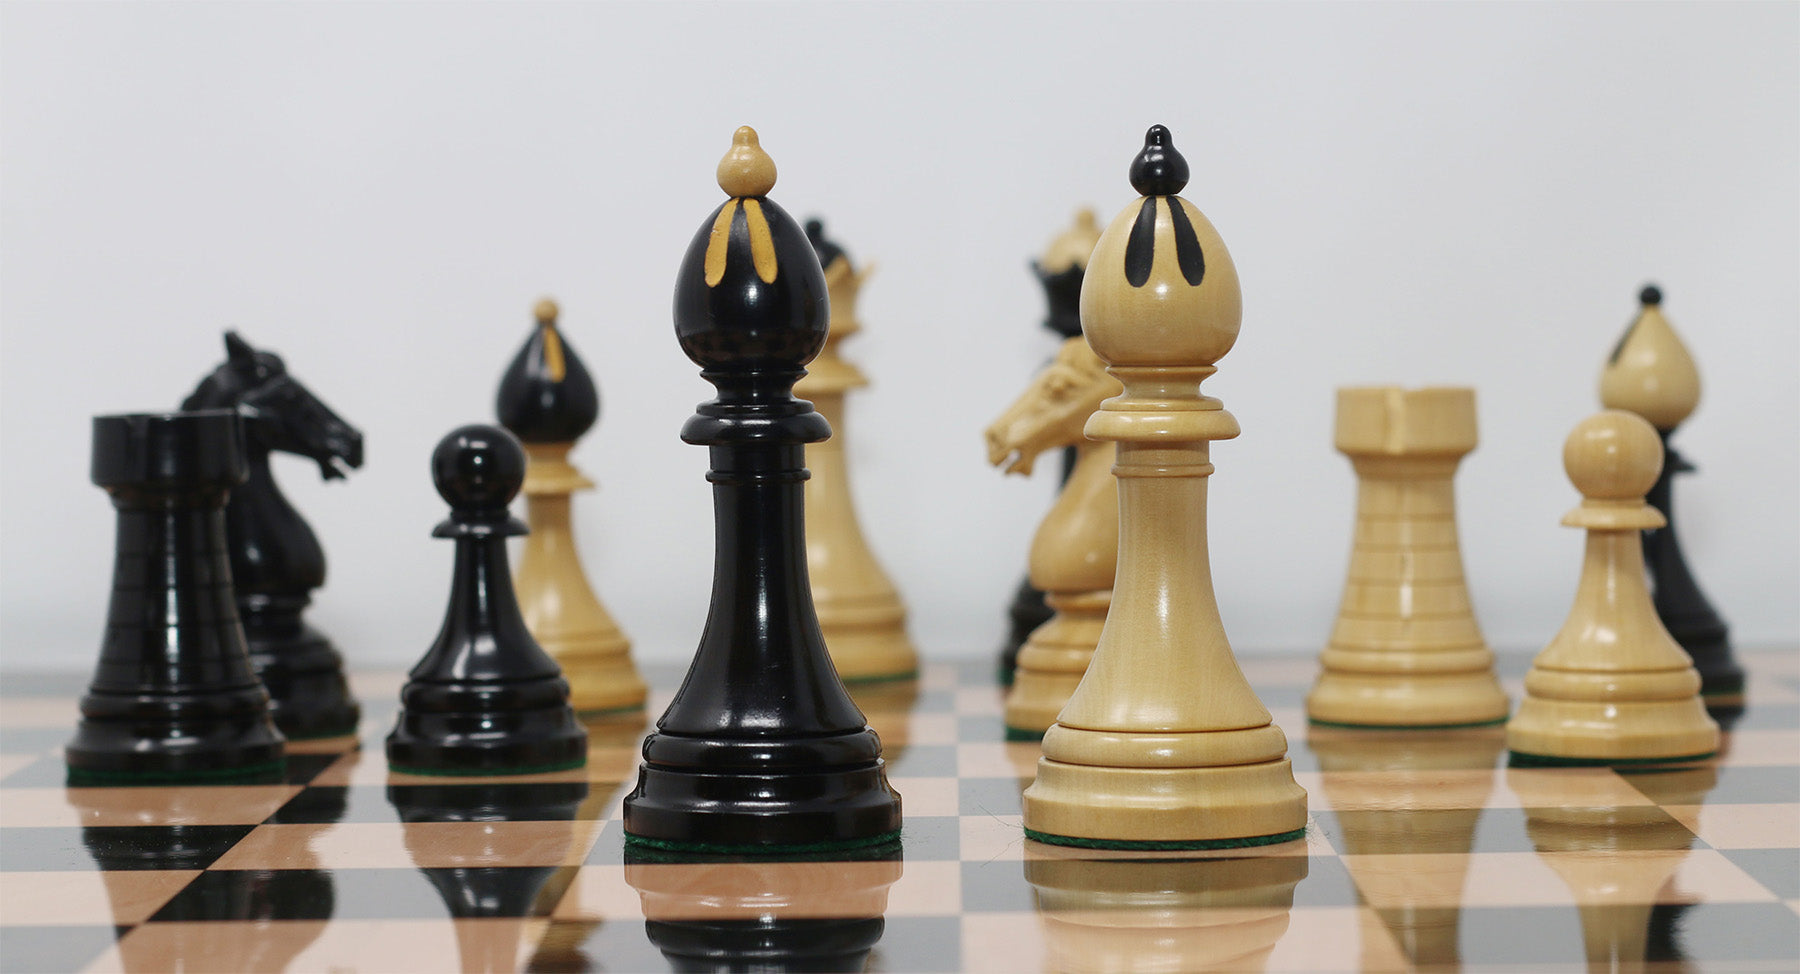 Ebony World Championship Chess Pieces Set 3.75" FIDE type+